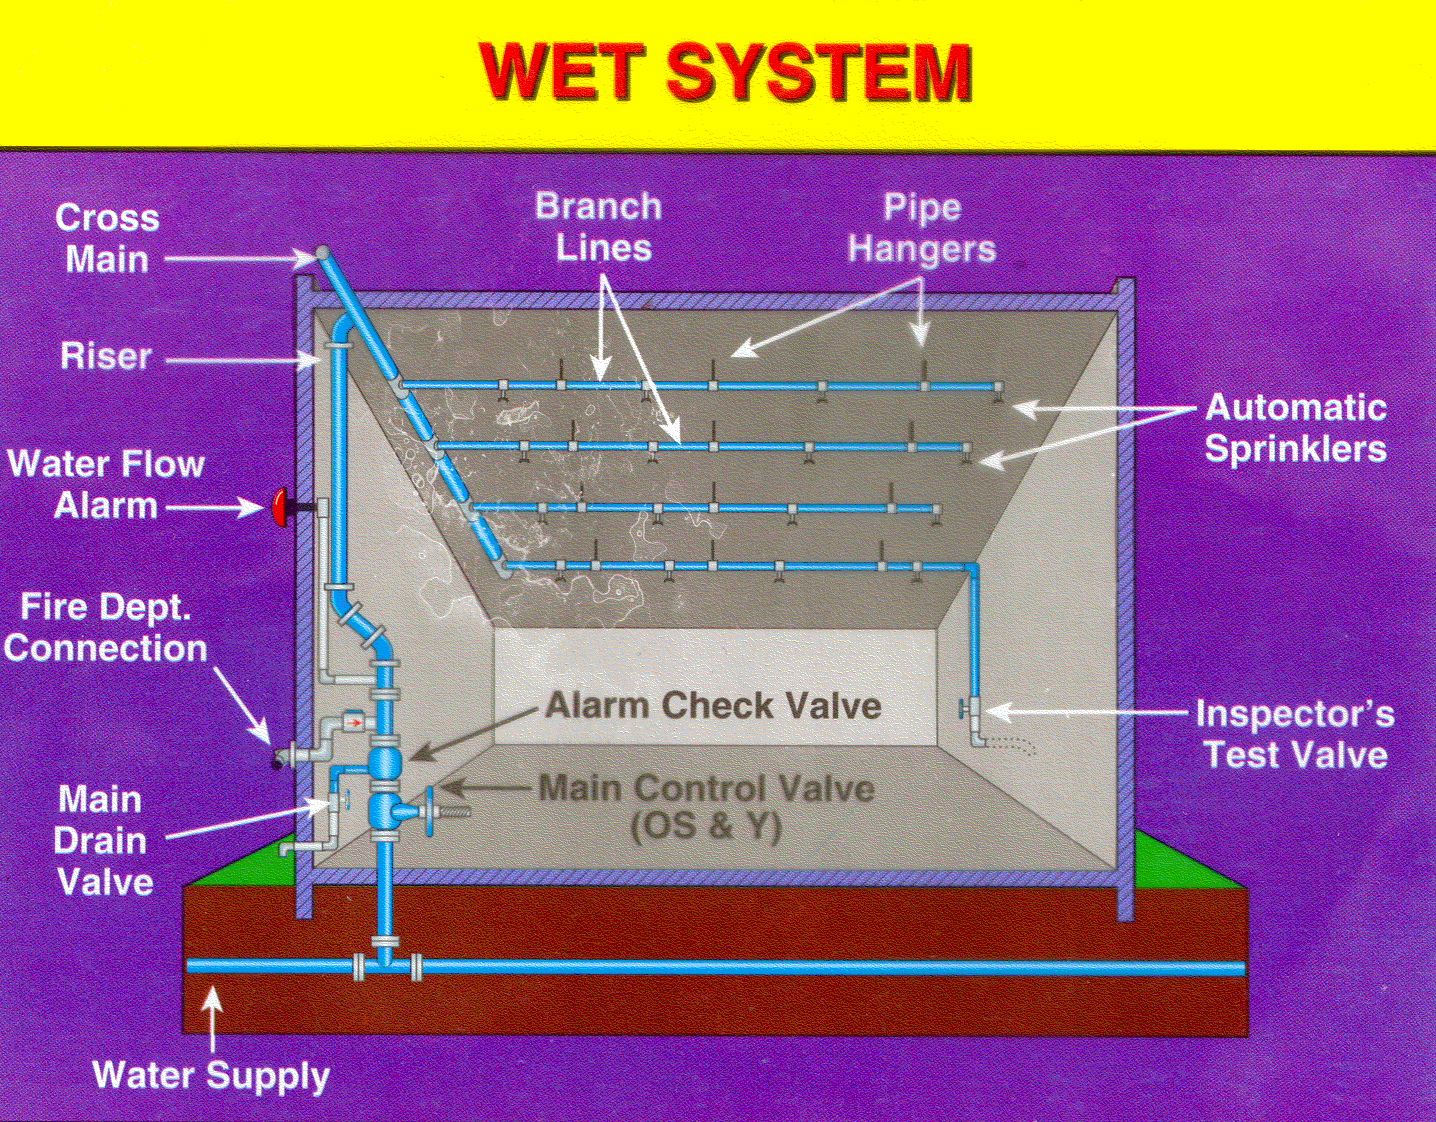 Wet System